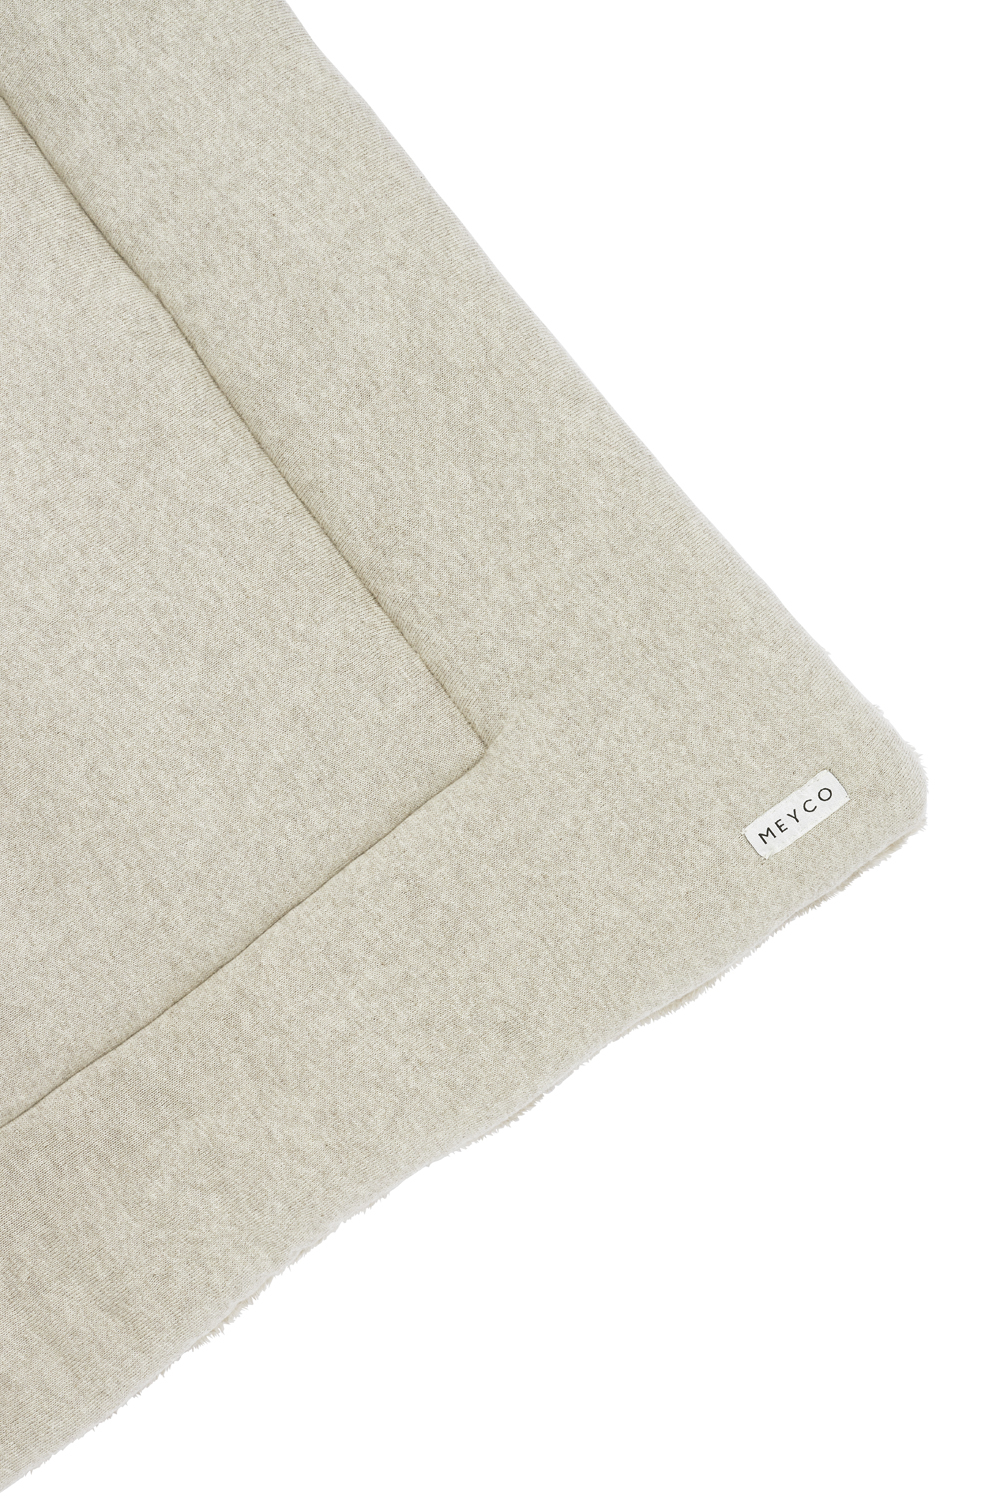 Playpen mattress Knit Basic teddy - sand melange - 77x97cm